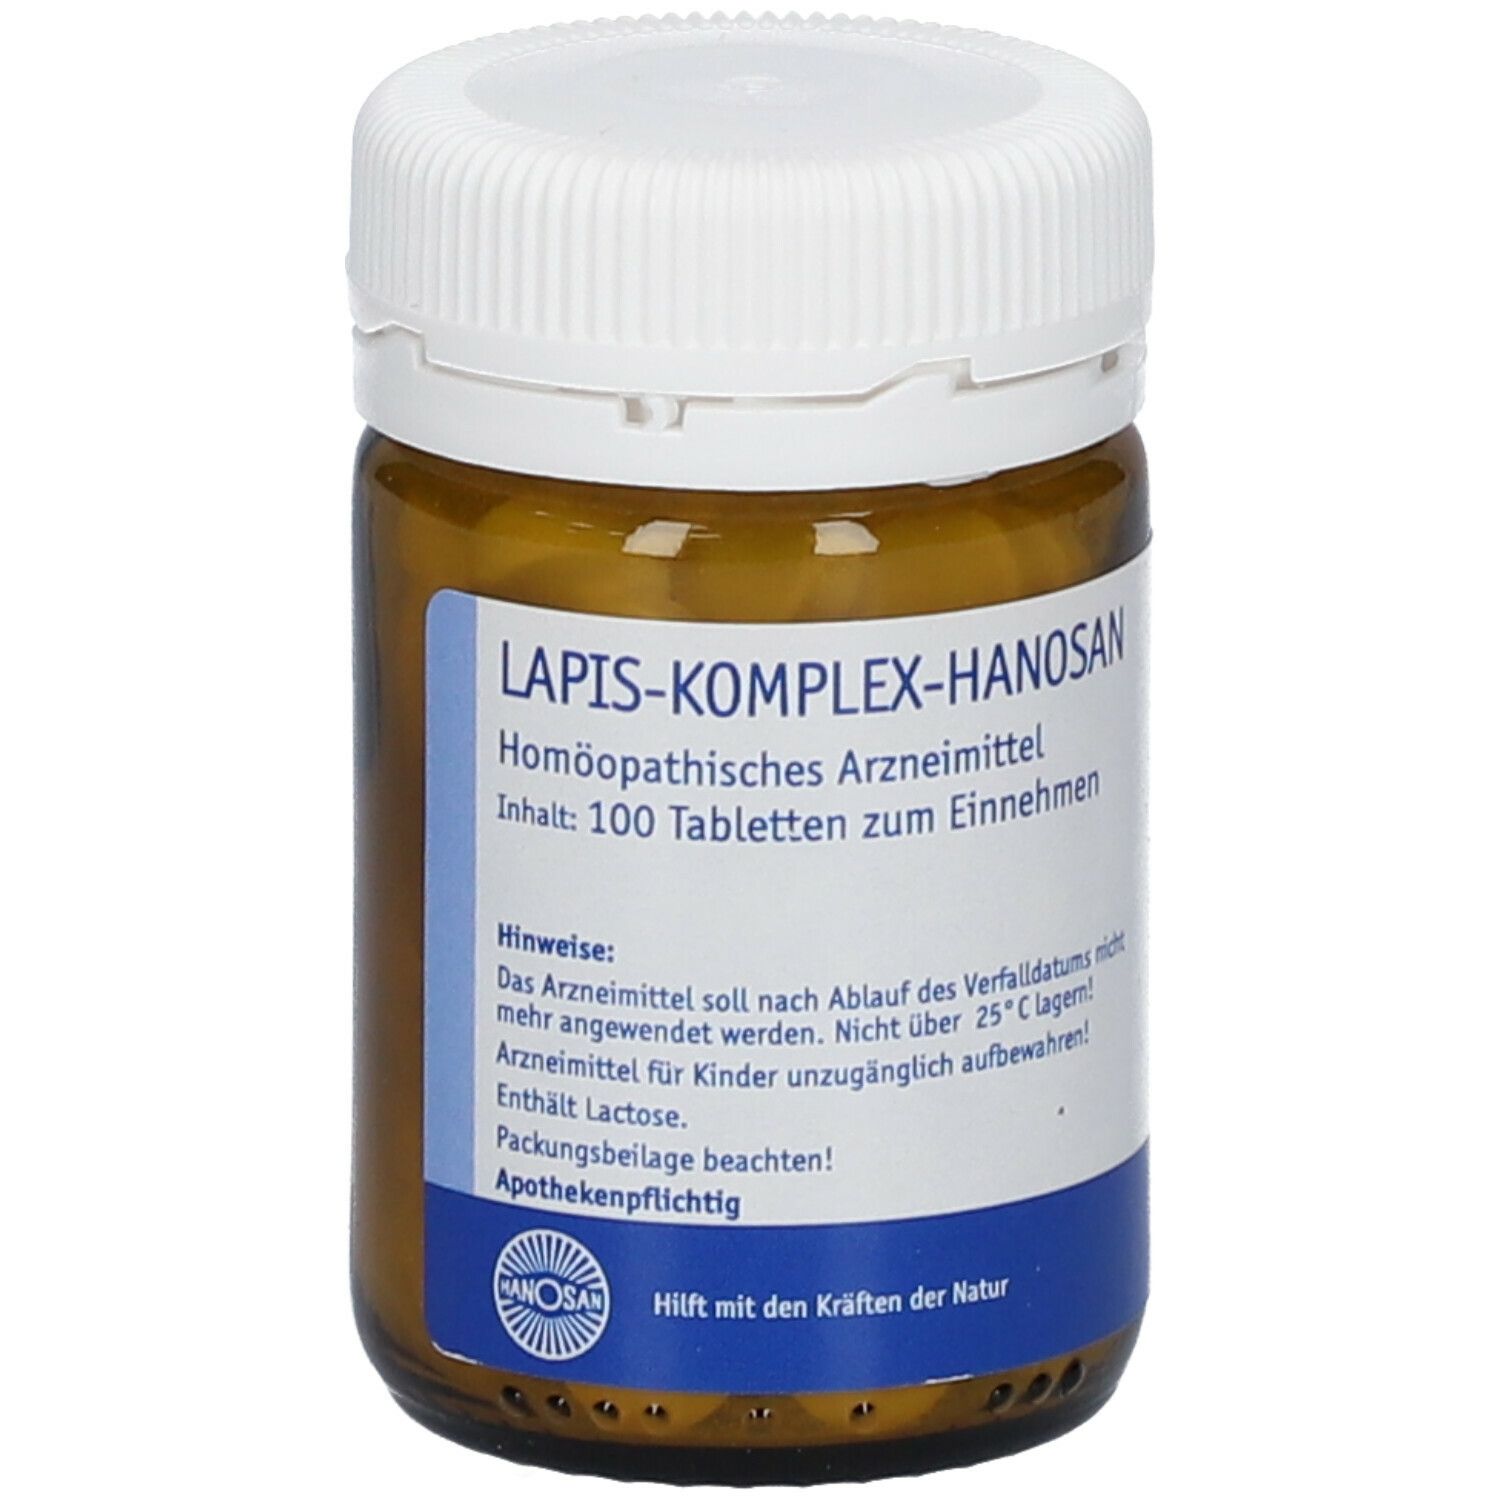 LAPIS-KOMPLEX-HANOSAN